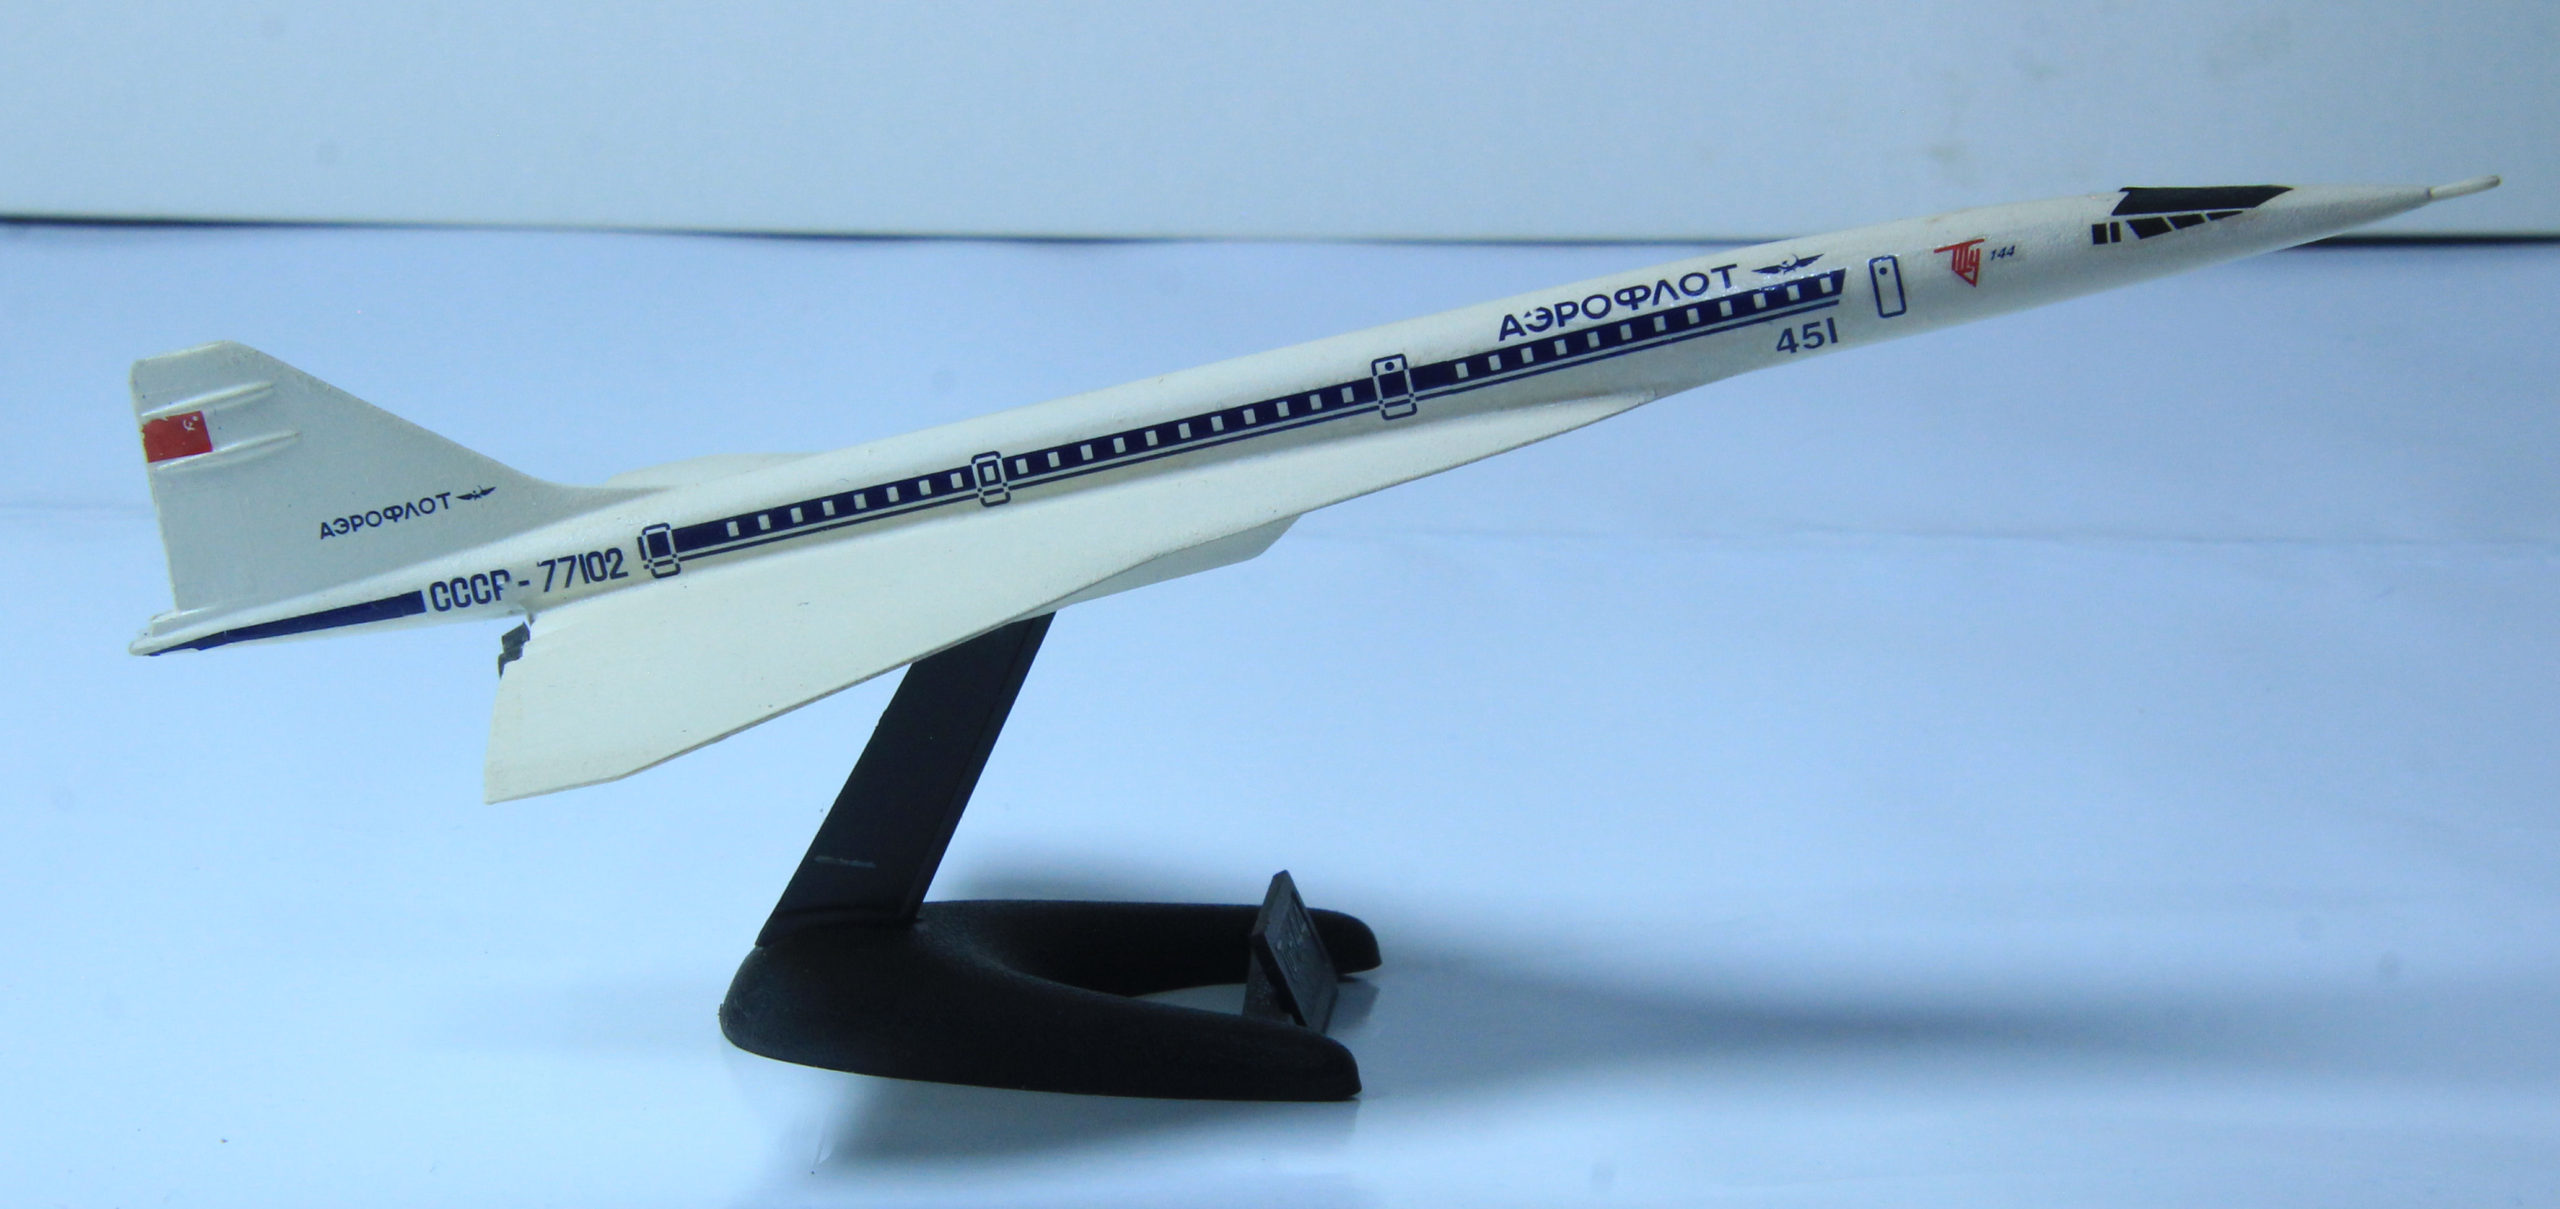 Tupolev Tu-144 Supersonic Transport Scale Models - Destination's Journey